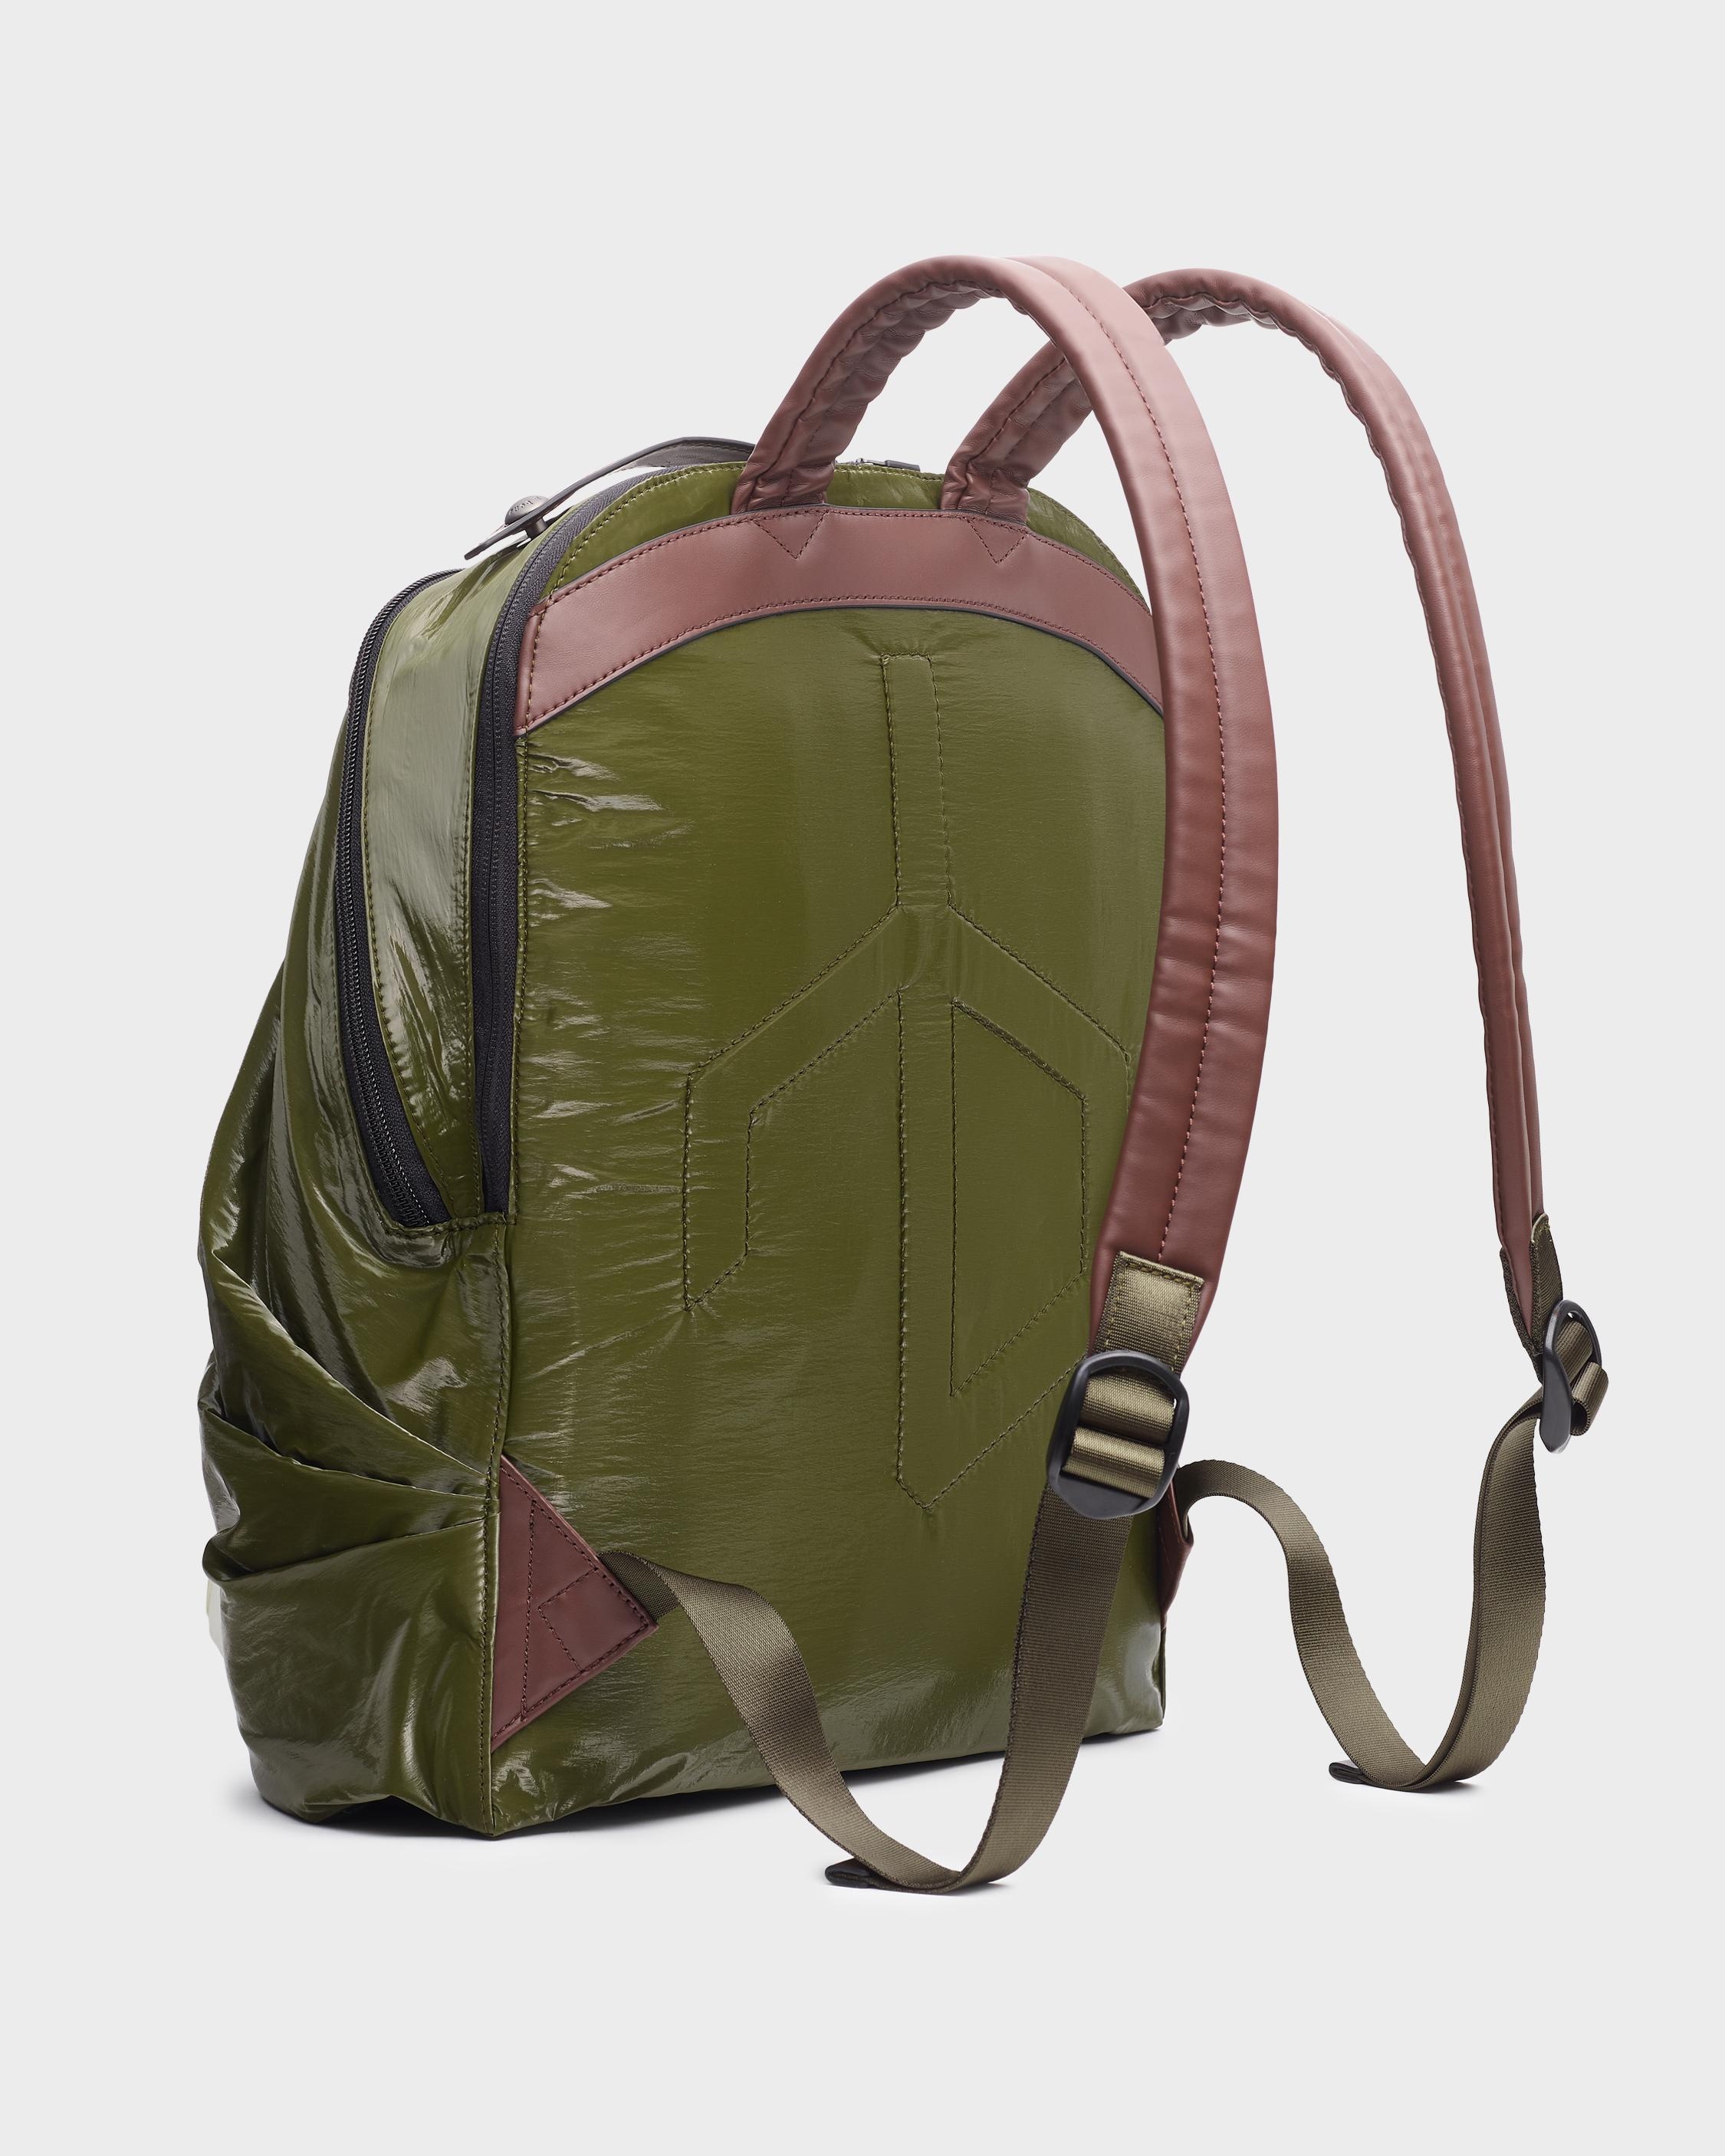 Commuter Backpack - Eco Nylon
Large Backpack - 4